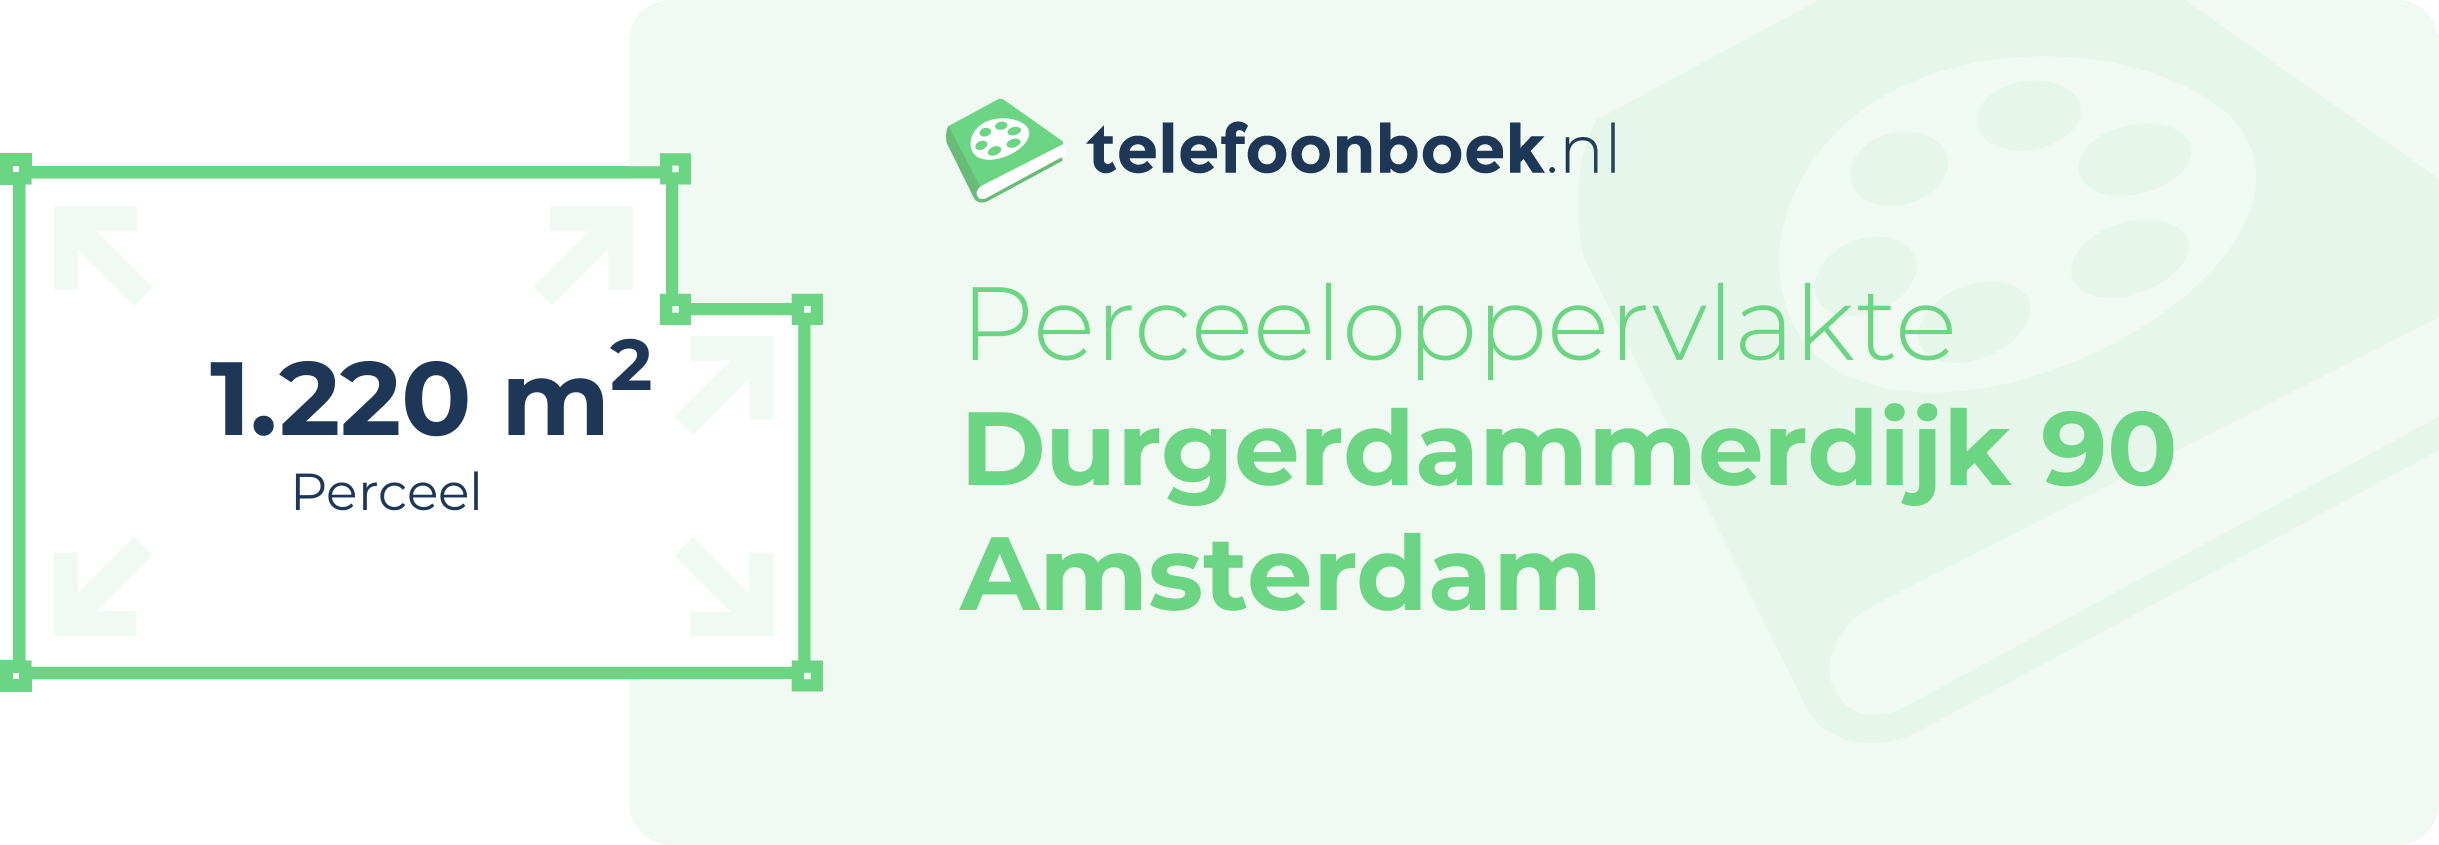 Perceeloppervlakte Durgerdammerdijk 90 Amsterdam